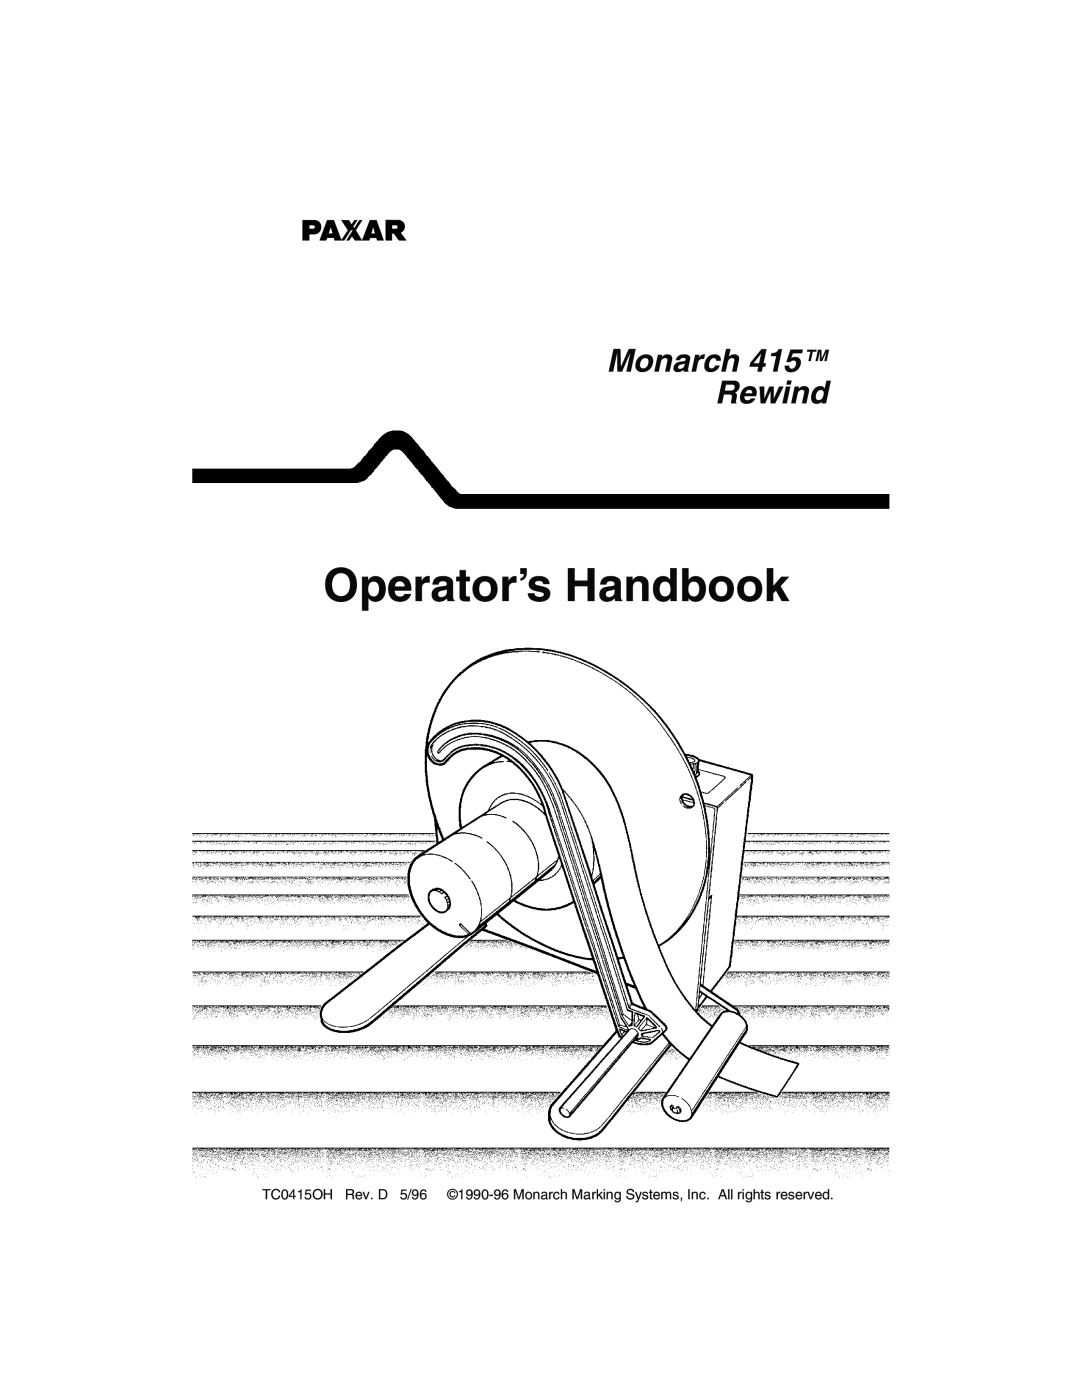 Paxar manual Operator’s Handbook, Monarch 415 TM Rewind 